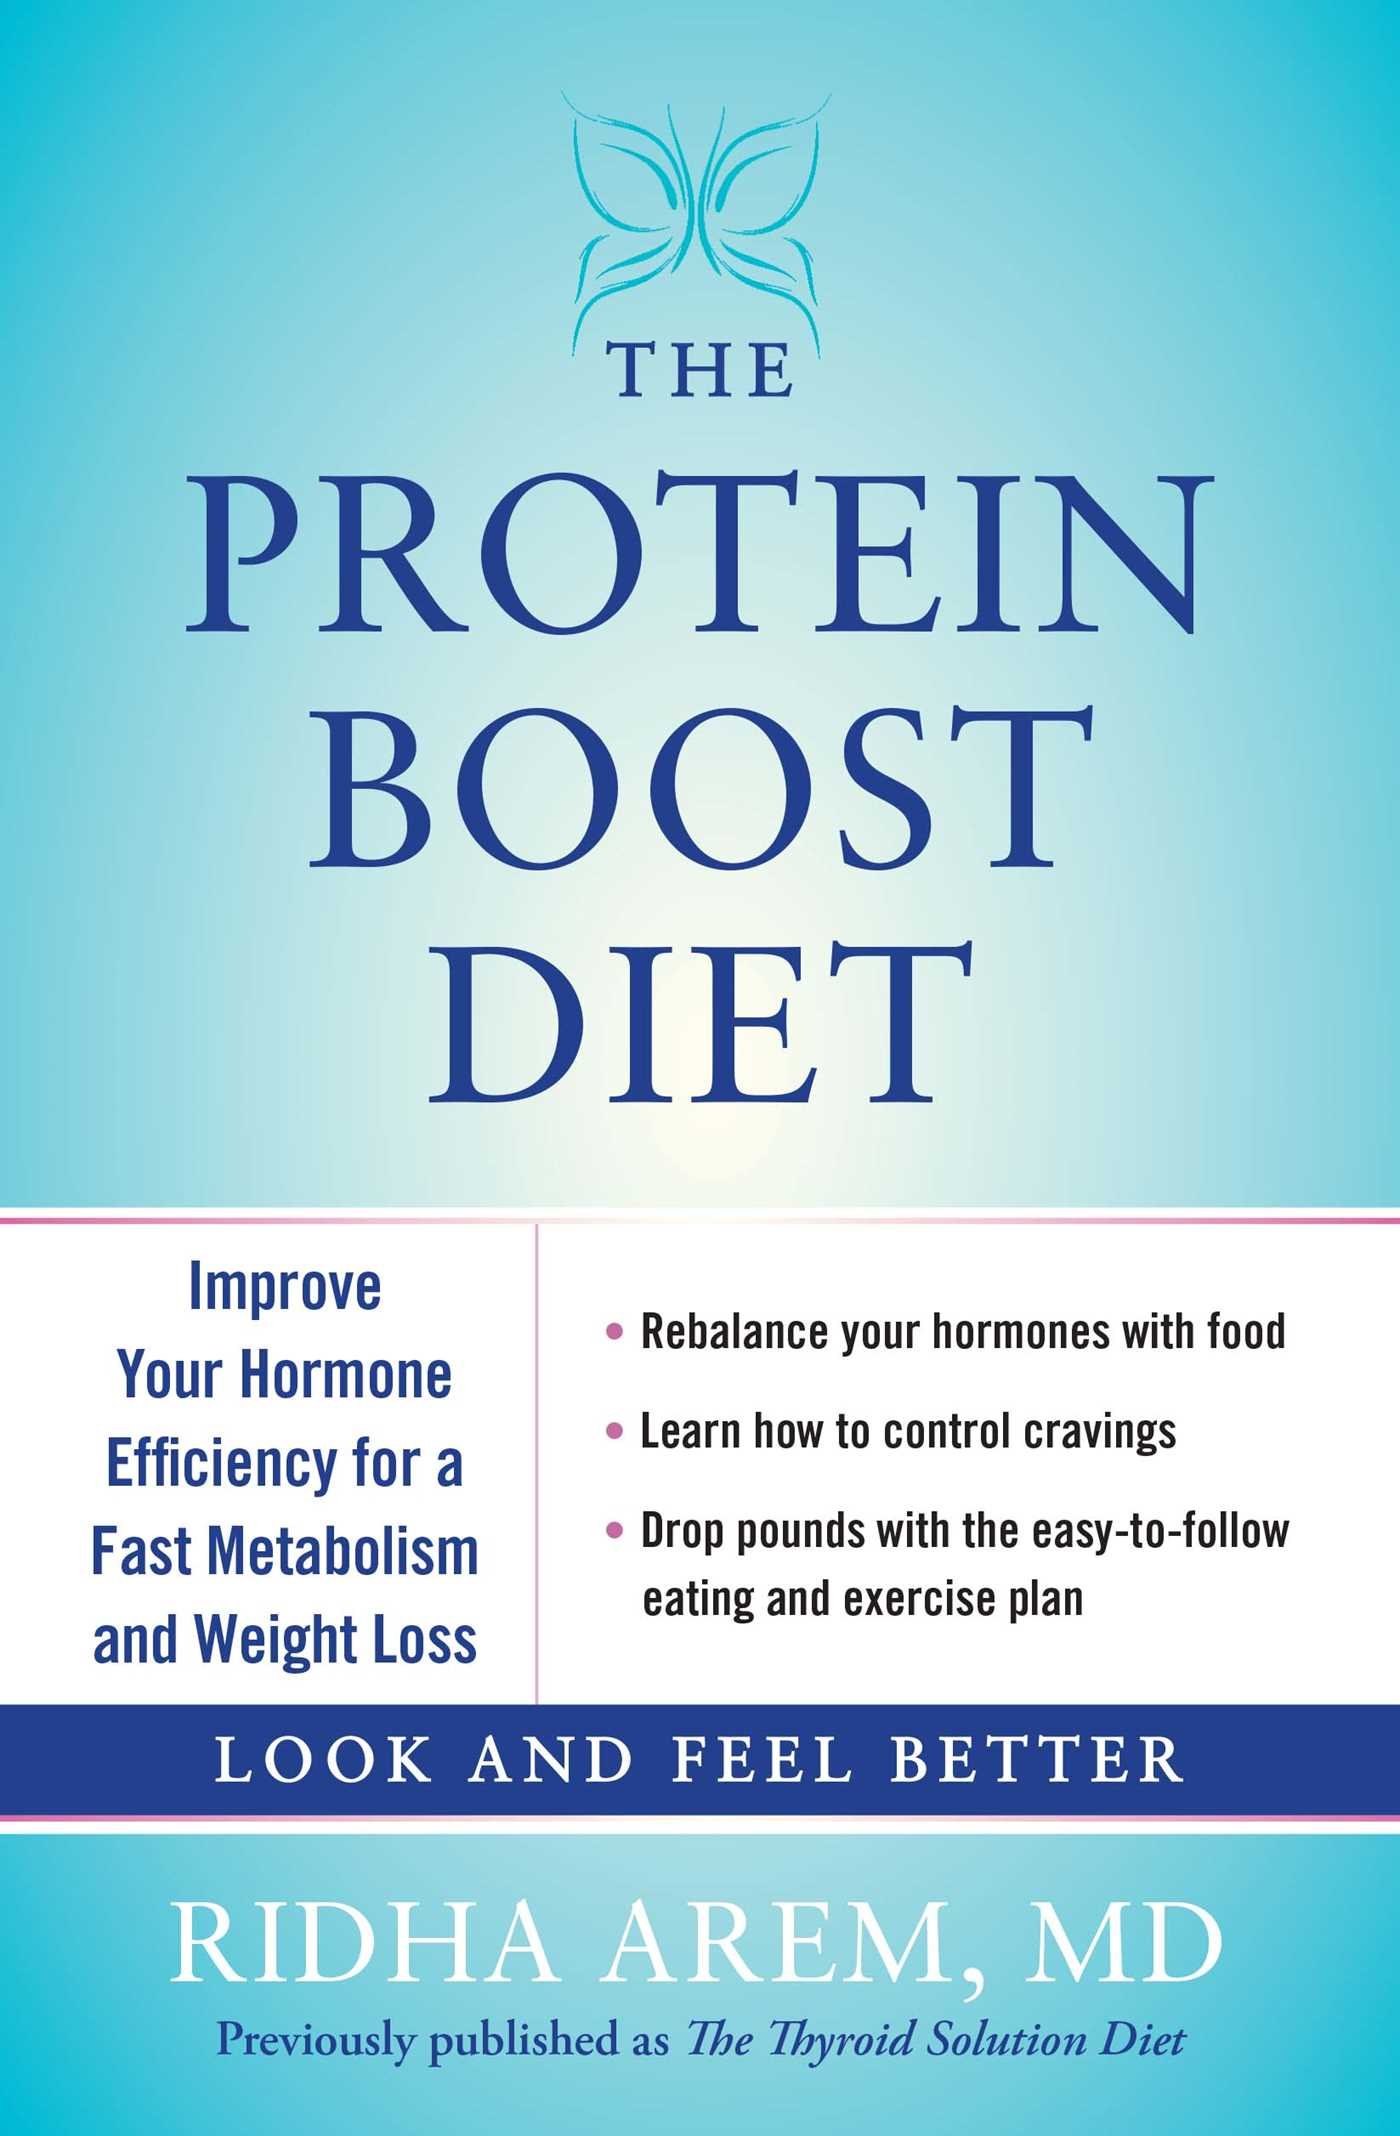 The Protein Boost Diet